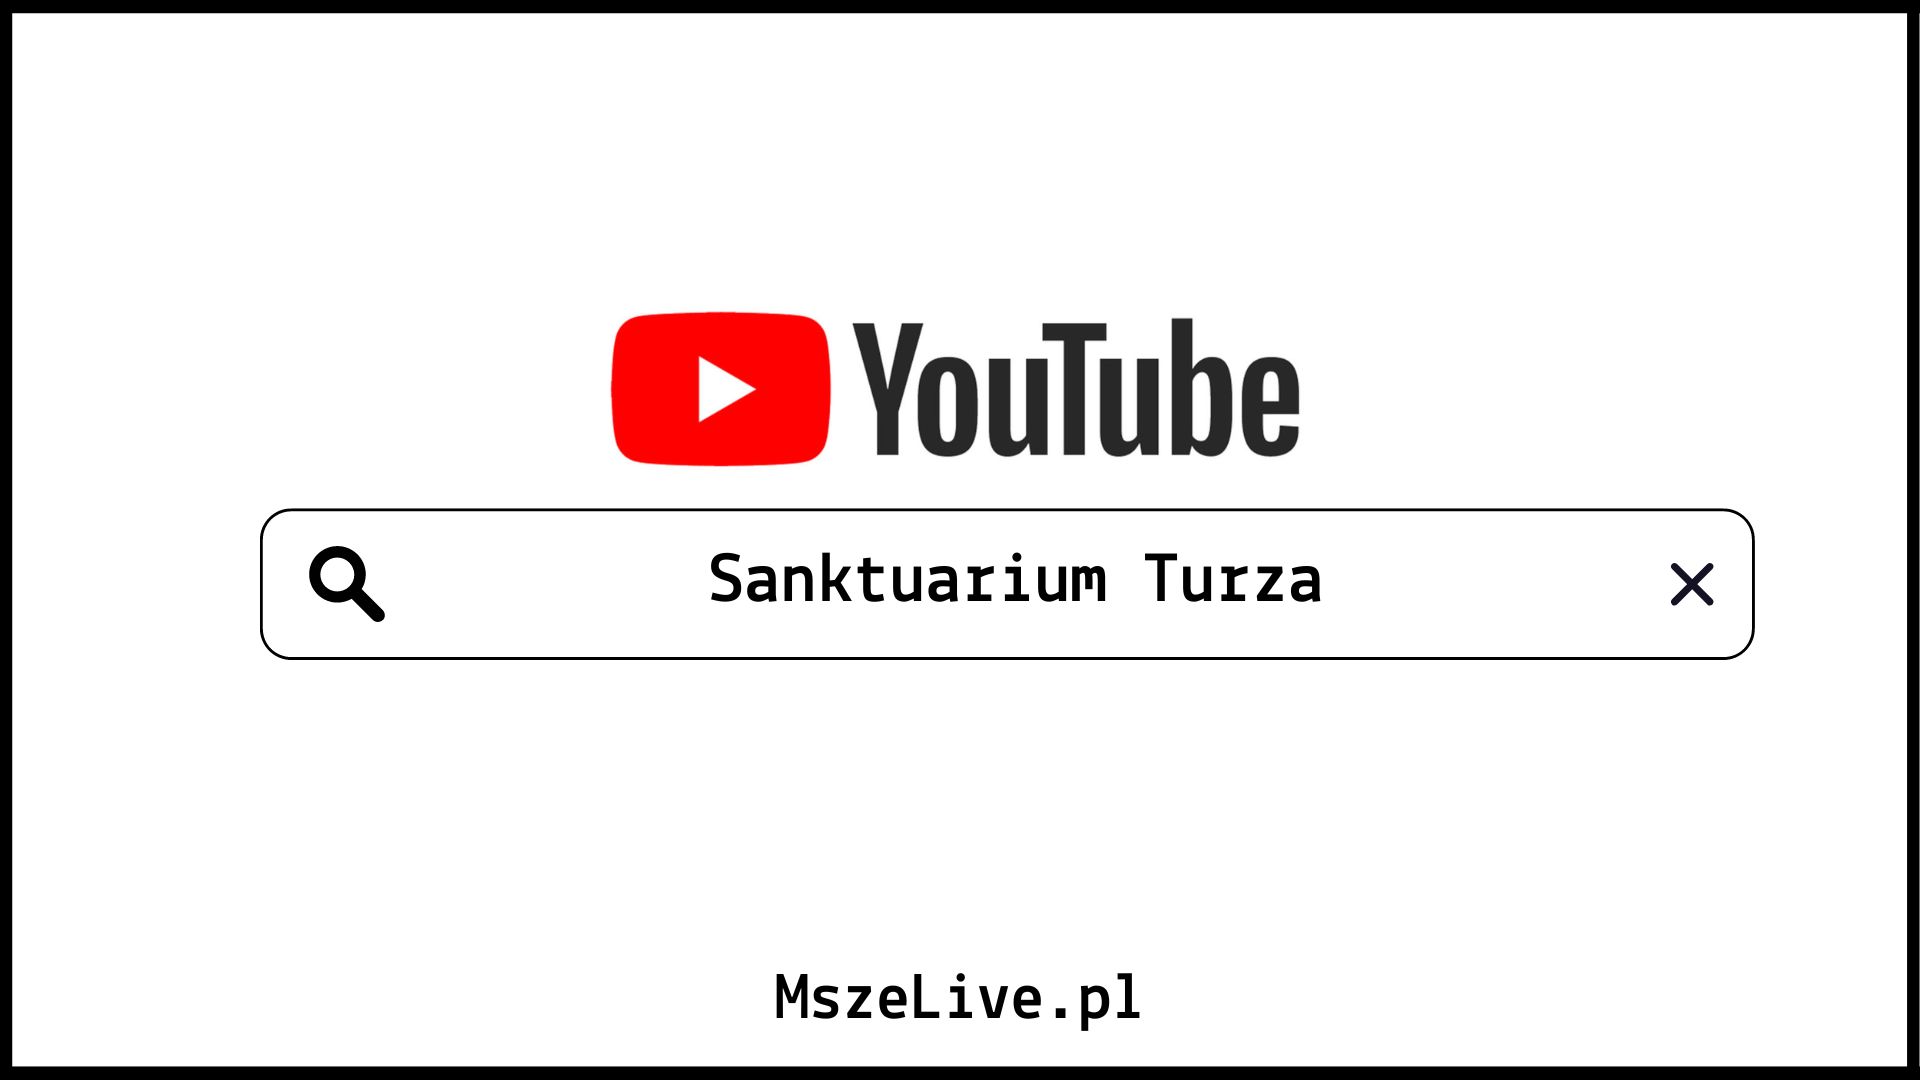 Youtube Sanktuarium Turza